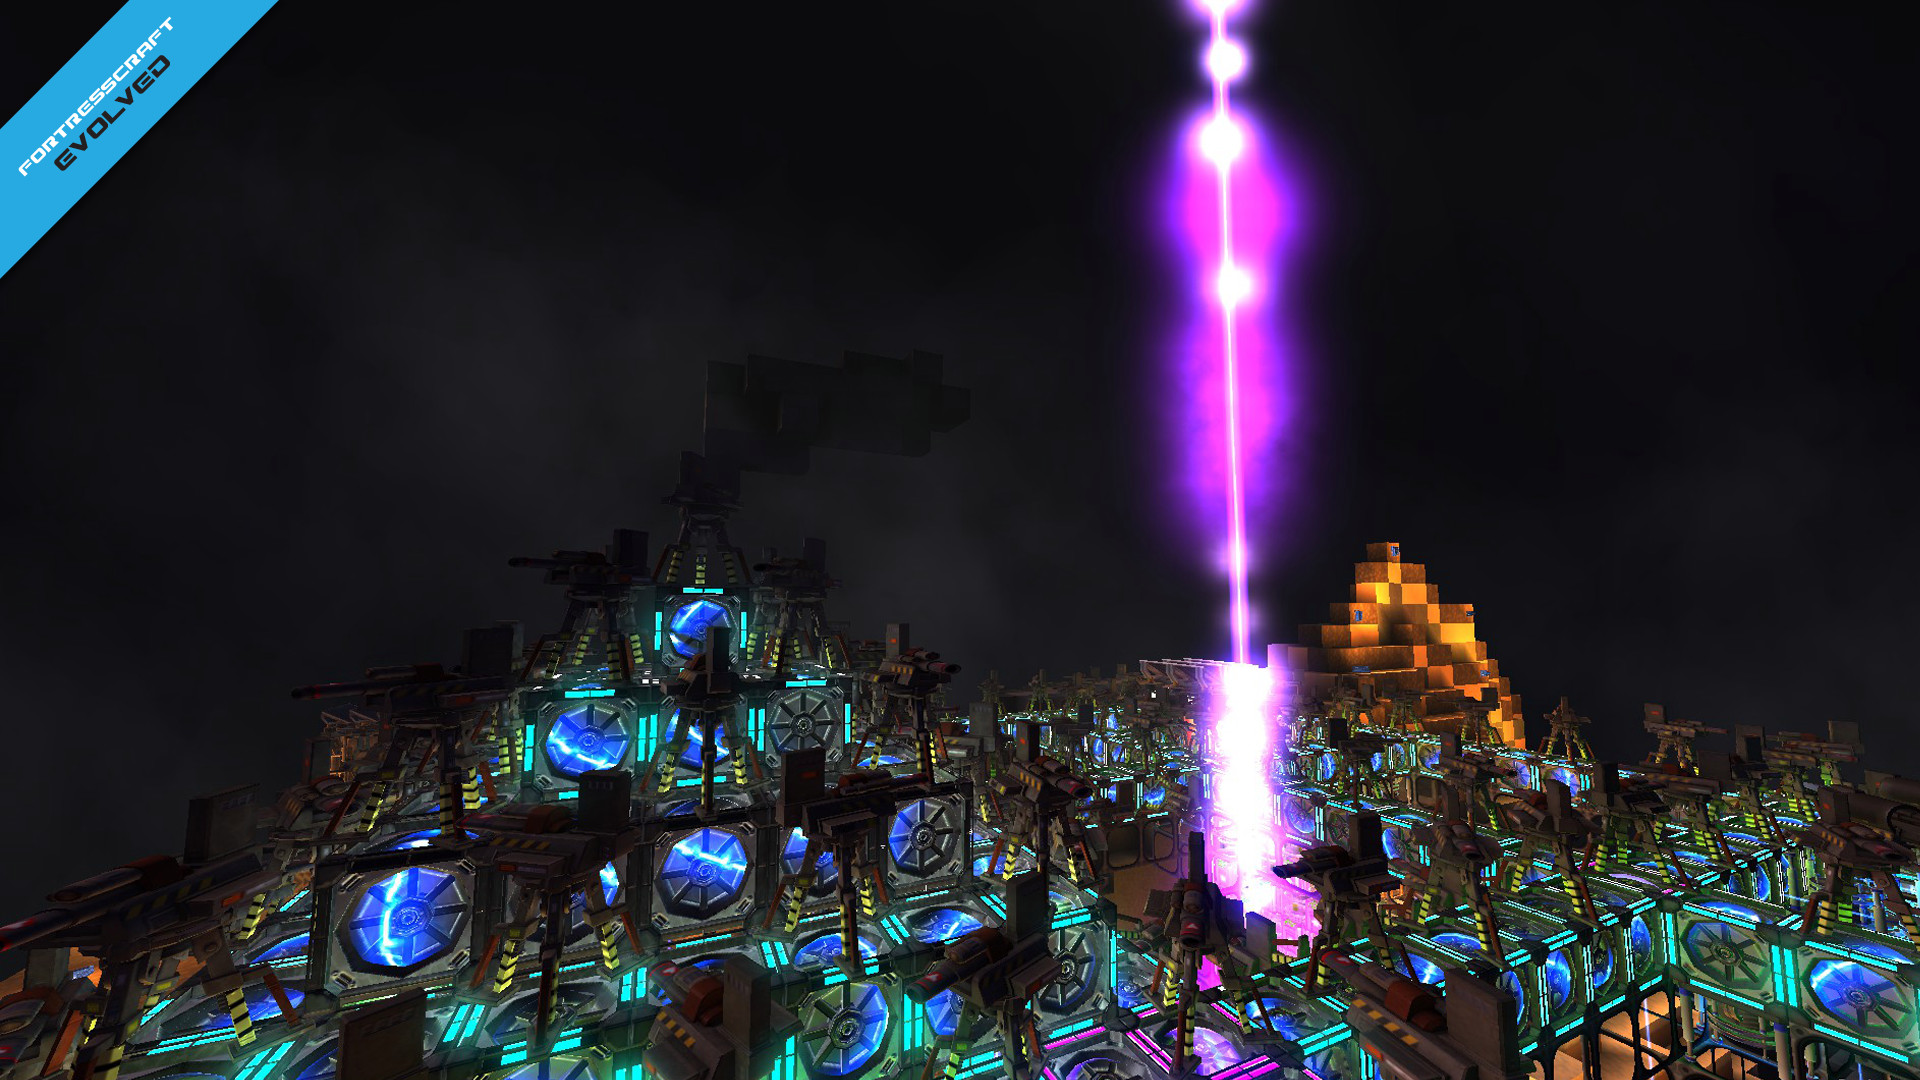 FortressCraft Evolved! screenshot